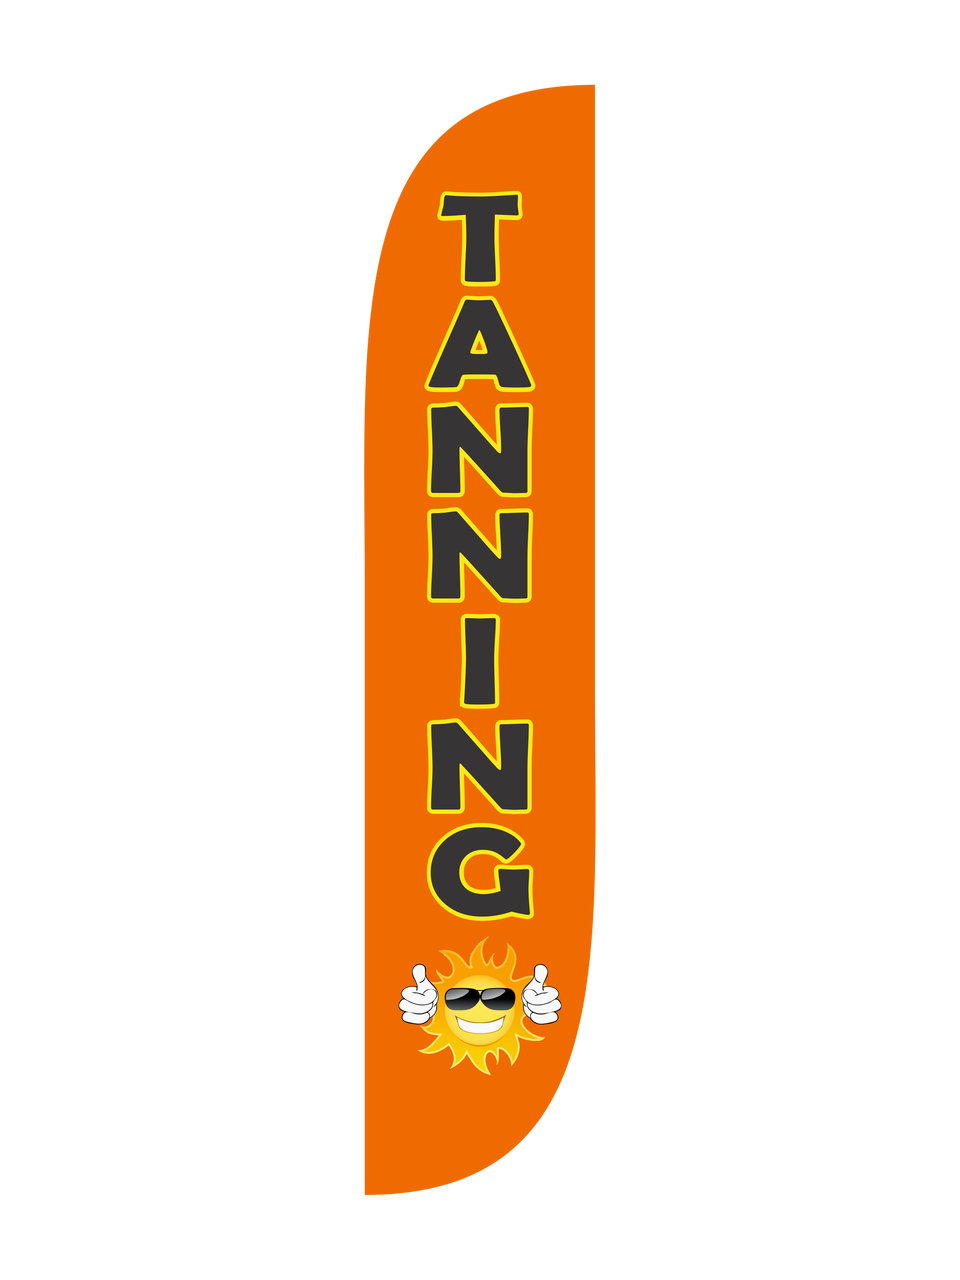 Tanning 12ft Feather Flag Orange